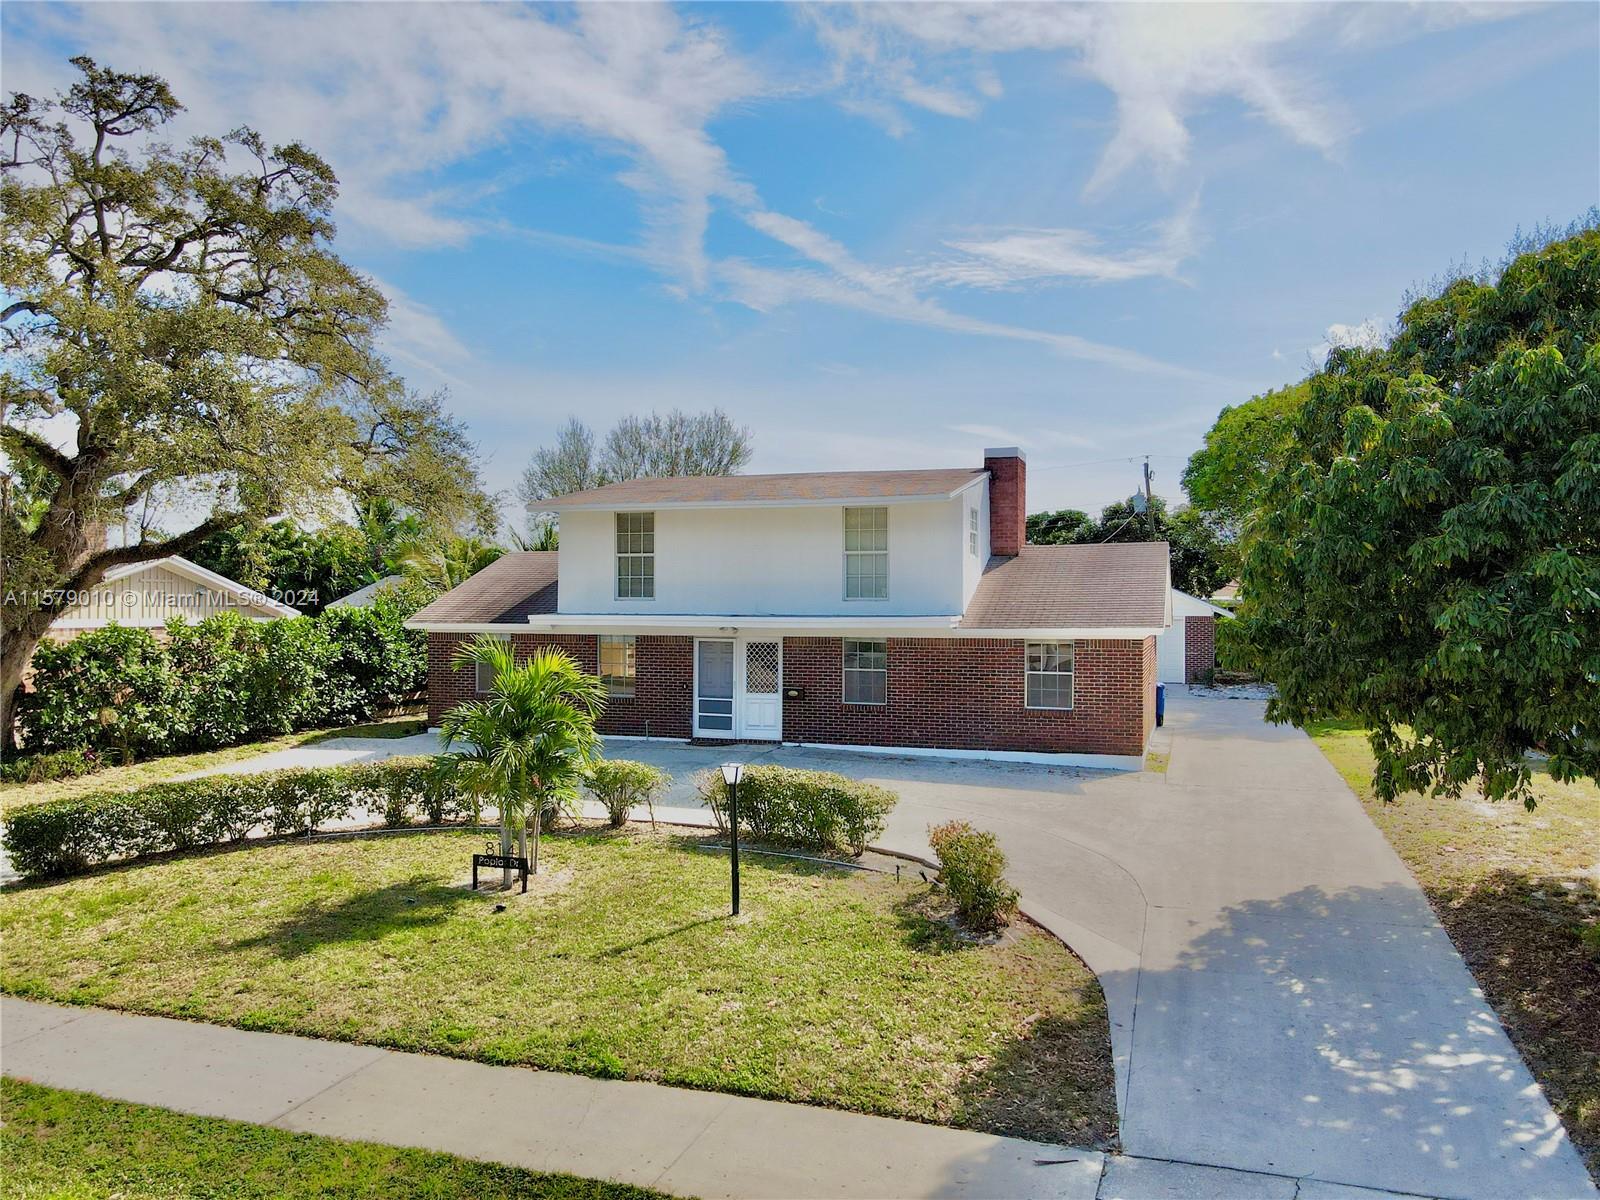 Rental Property at 814 Poplar Dr 2, Lake Park, Palm Beach County, Florida - Bedrooms: 2 
Bathrooms: 1  - $1,500 MO.